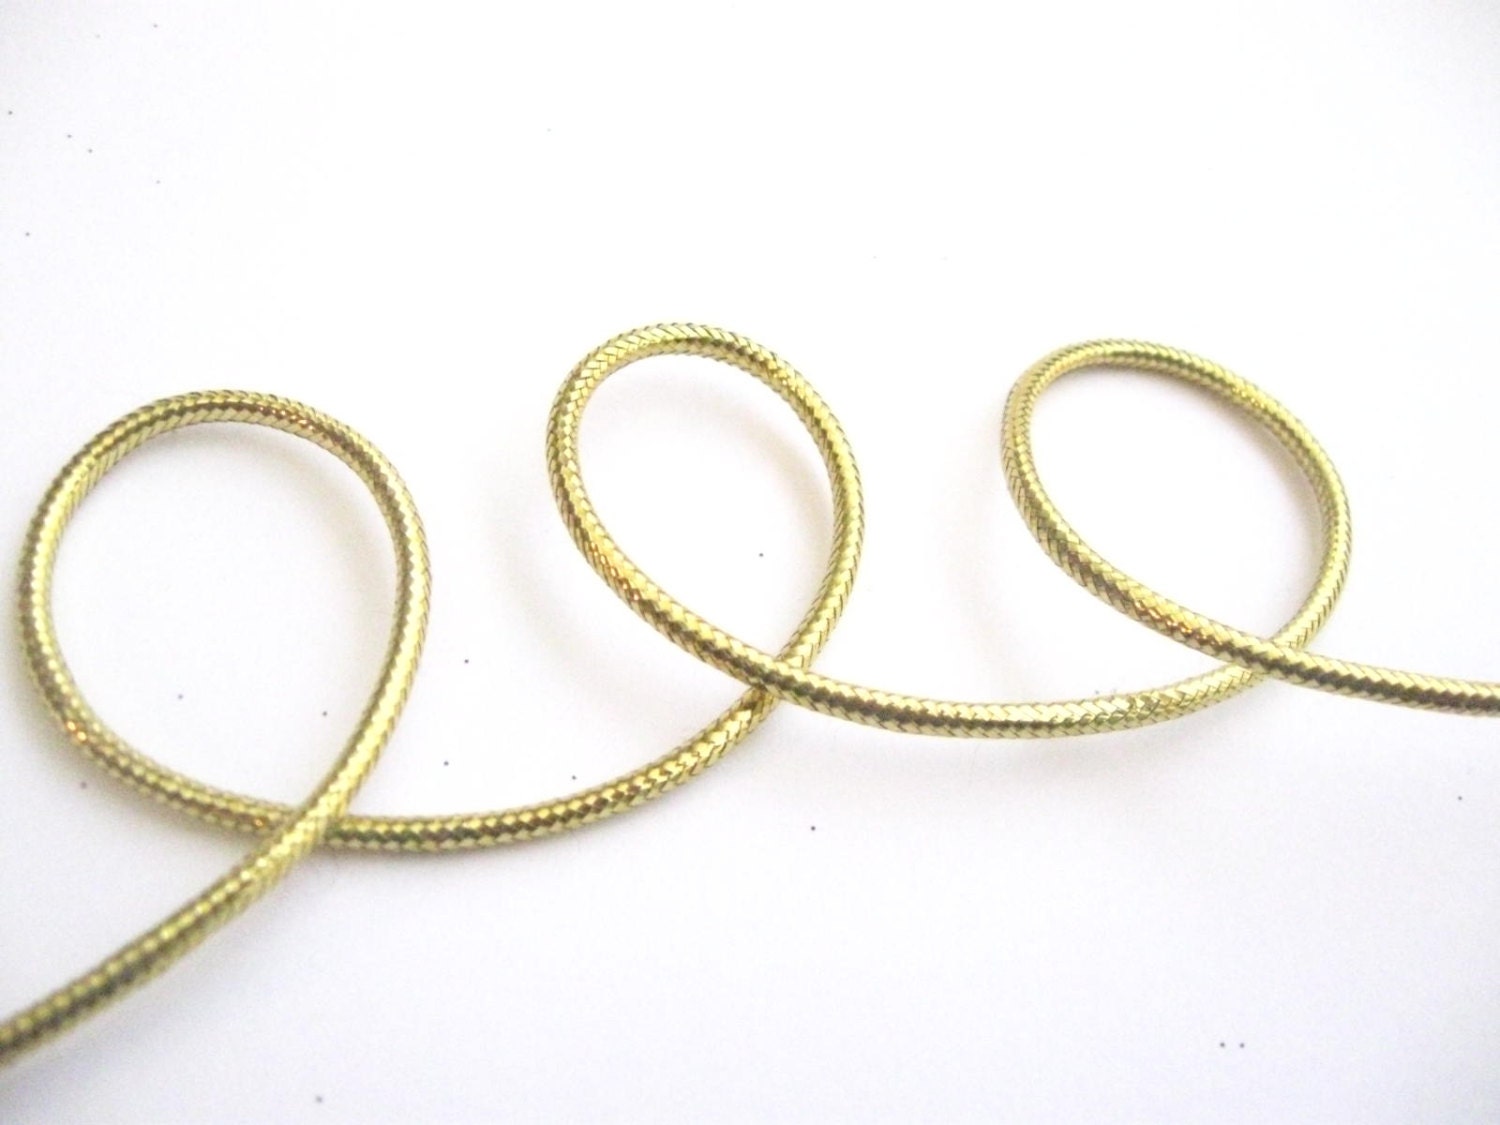 Gold Metallic Cord Trim Ribbon  - By the yard- Christmas/Weddings/Holidays/Everyday gift wrap decor - VanCocoaDesigns